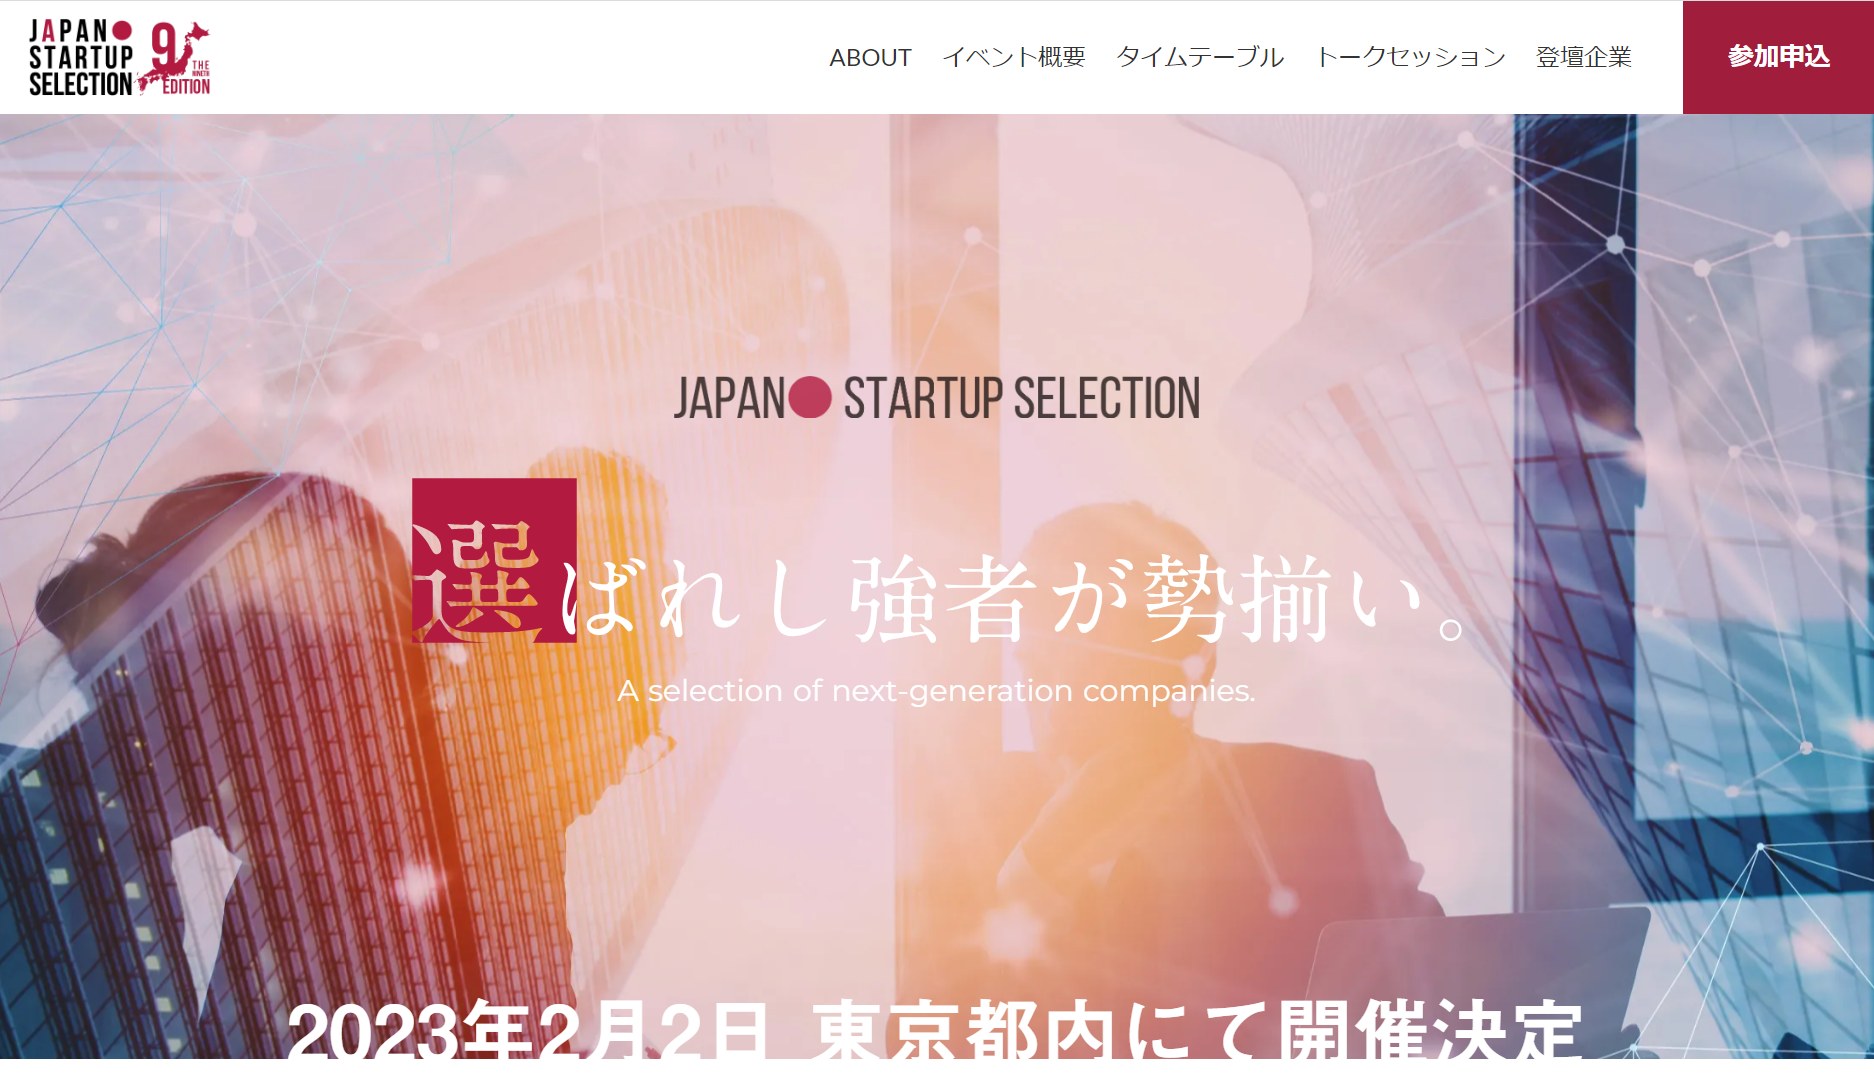 Japan Startup Selection 9th Editionにおける登壇のお知らせ